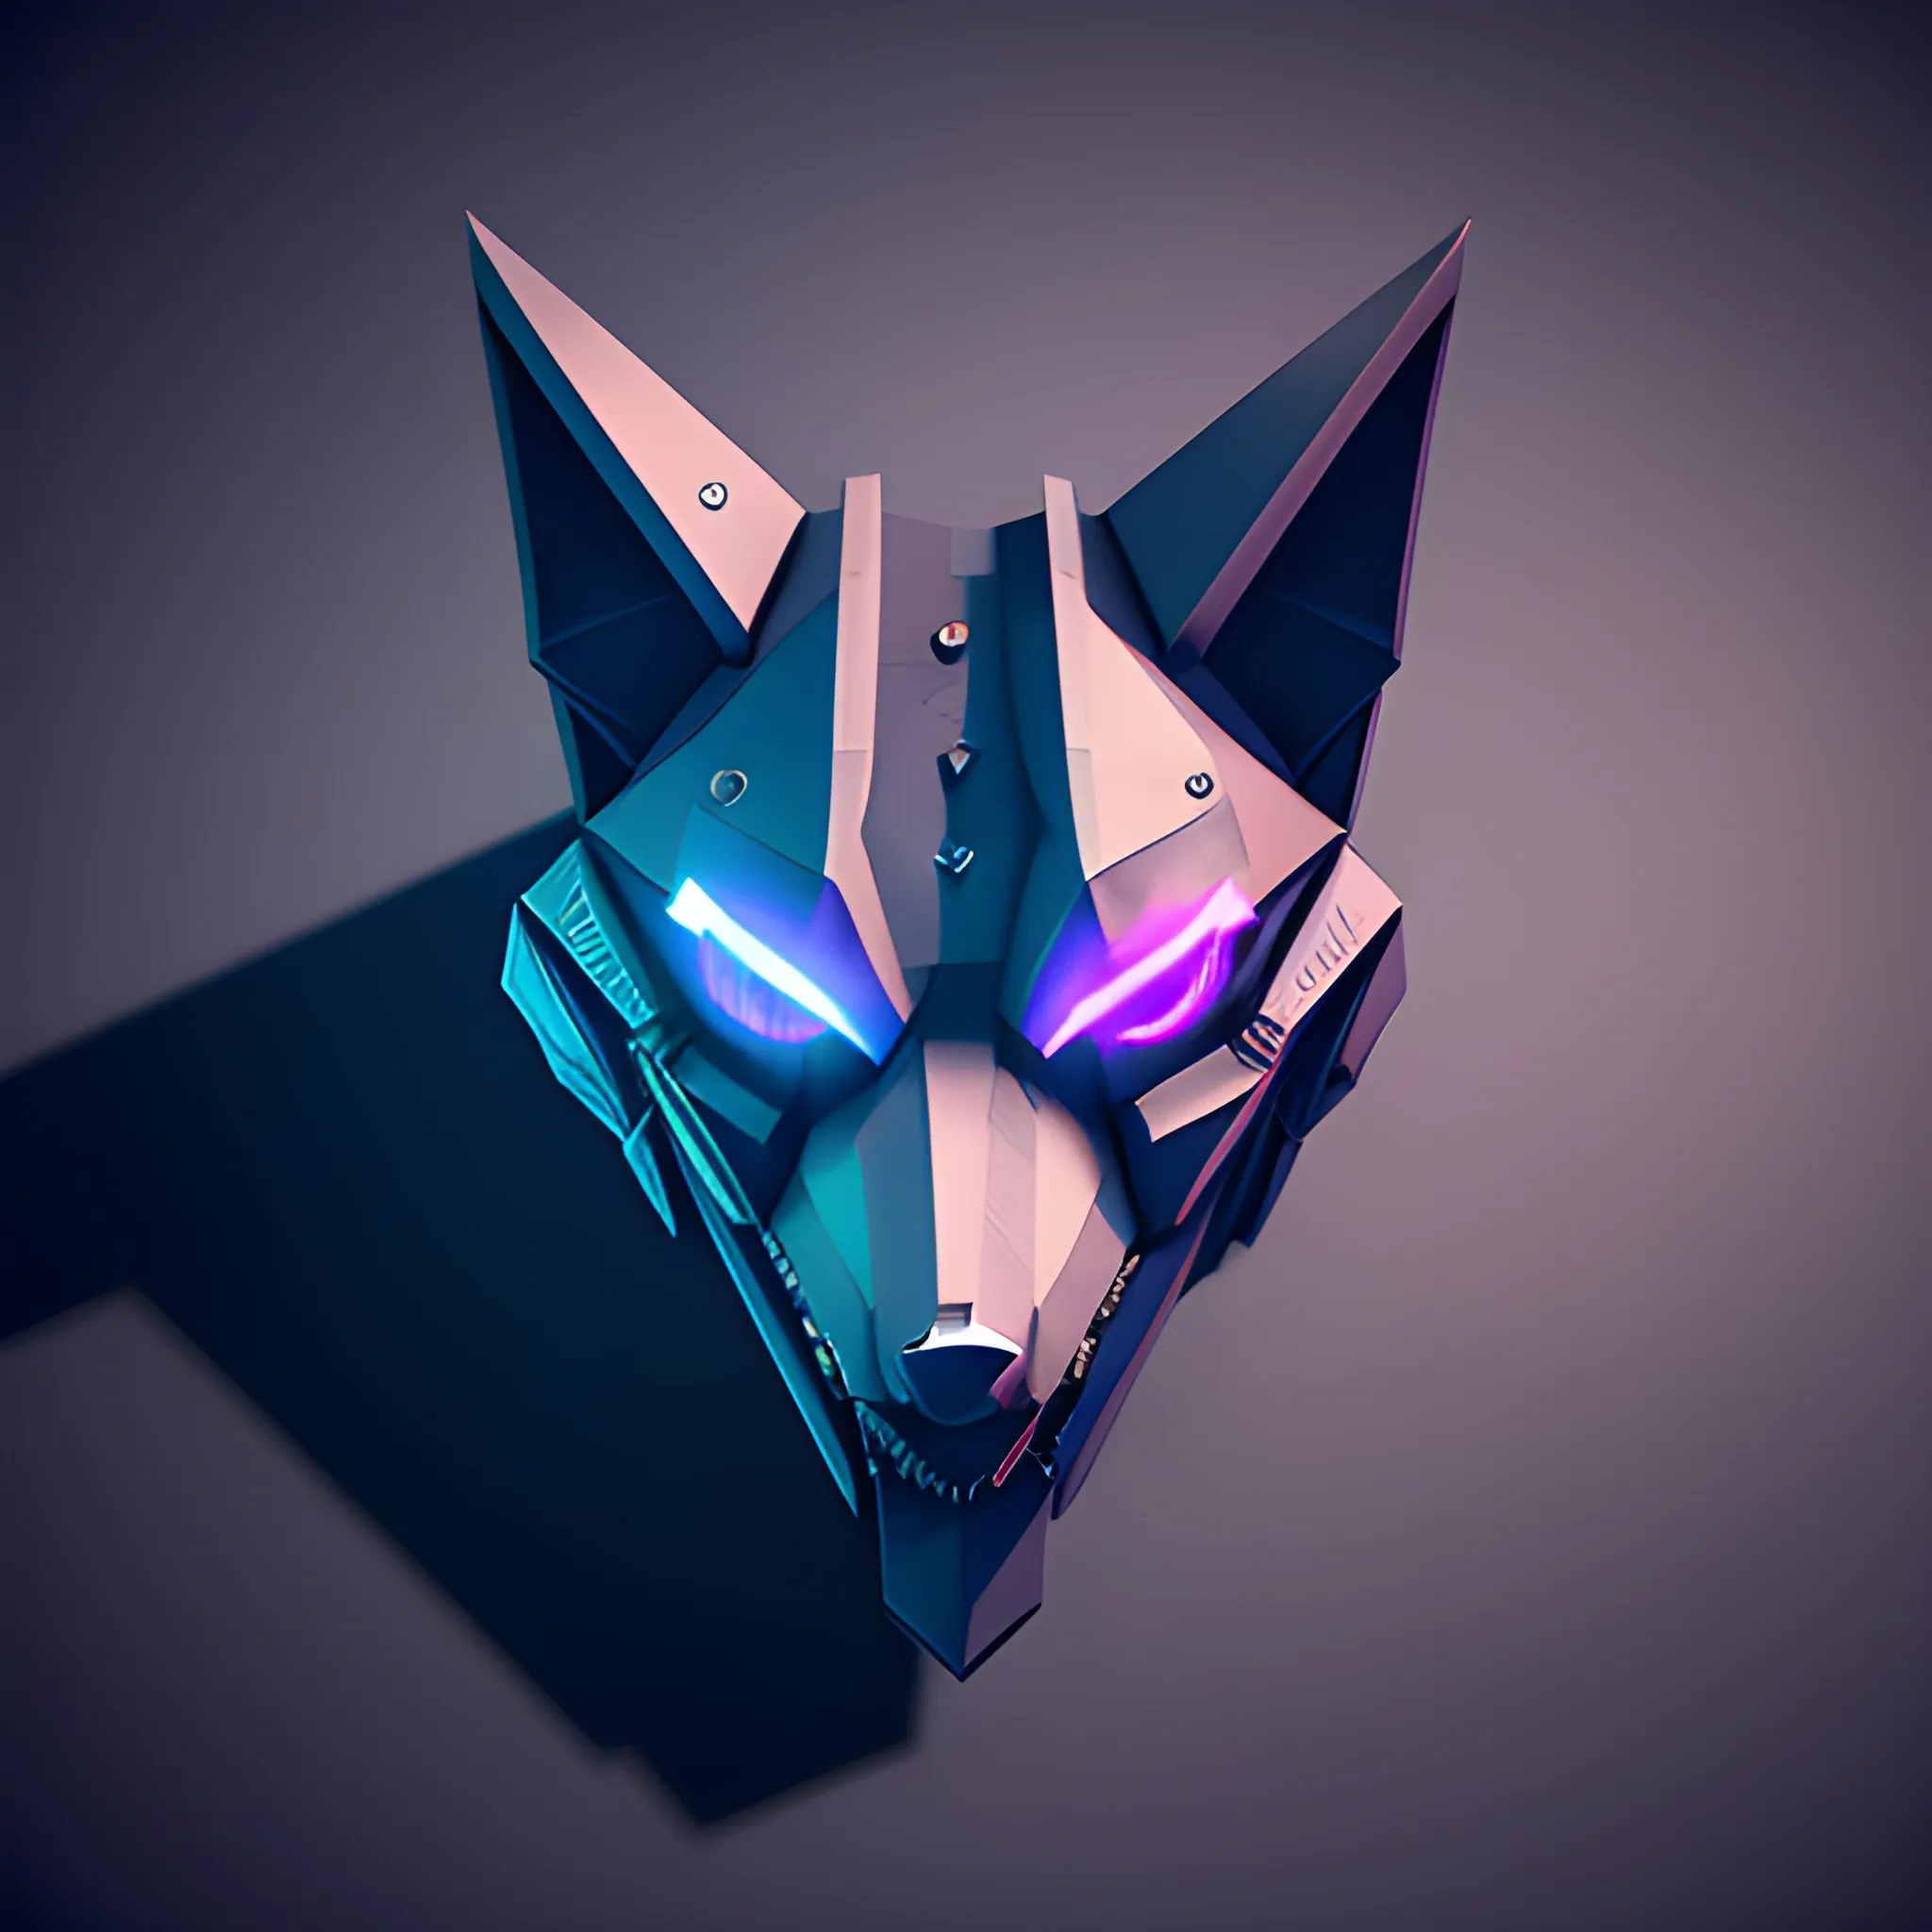 Cyberpunk lone wolf  logo
, 3D, Trippy,